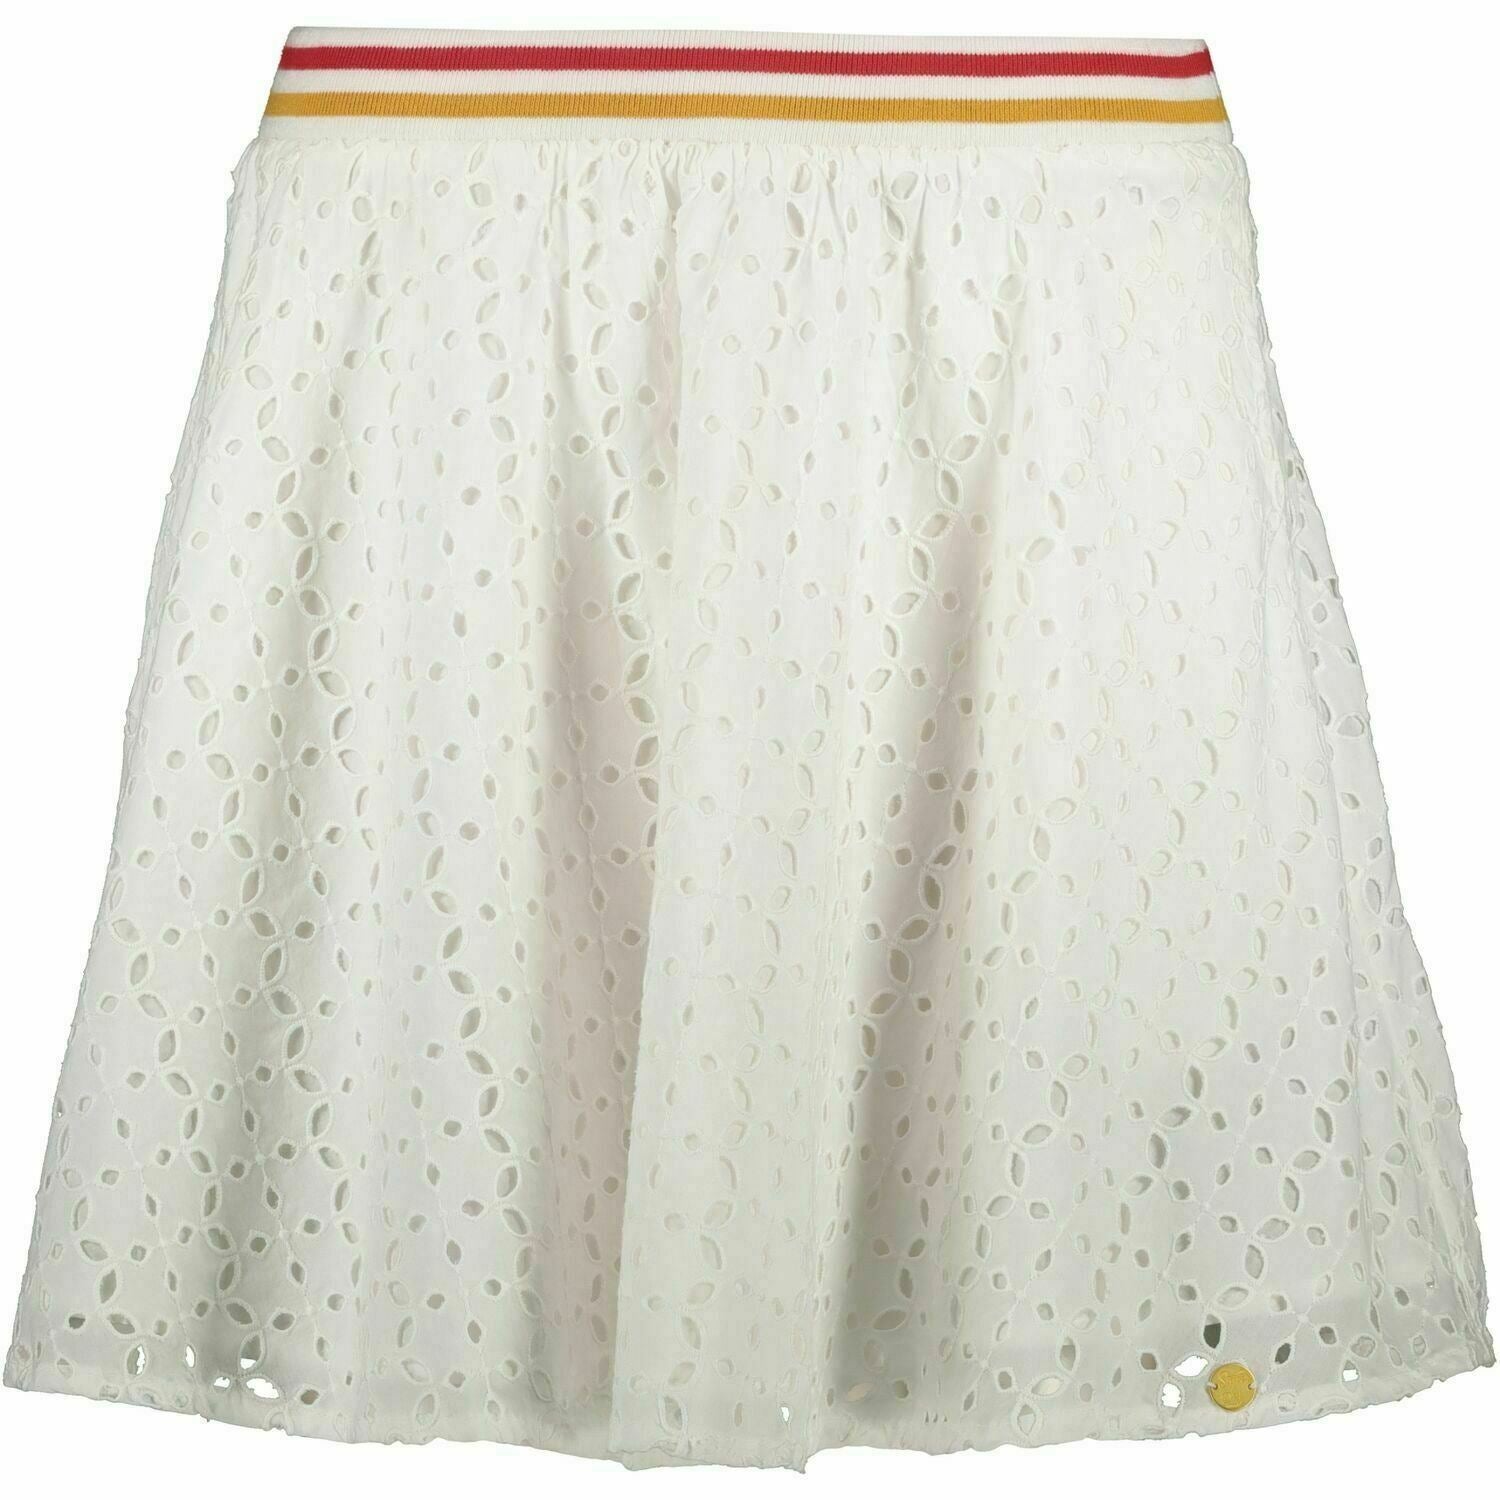 SUPERDRY Women's TEAGAN SCHIFFLI Skirt, White, size M / UK 12